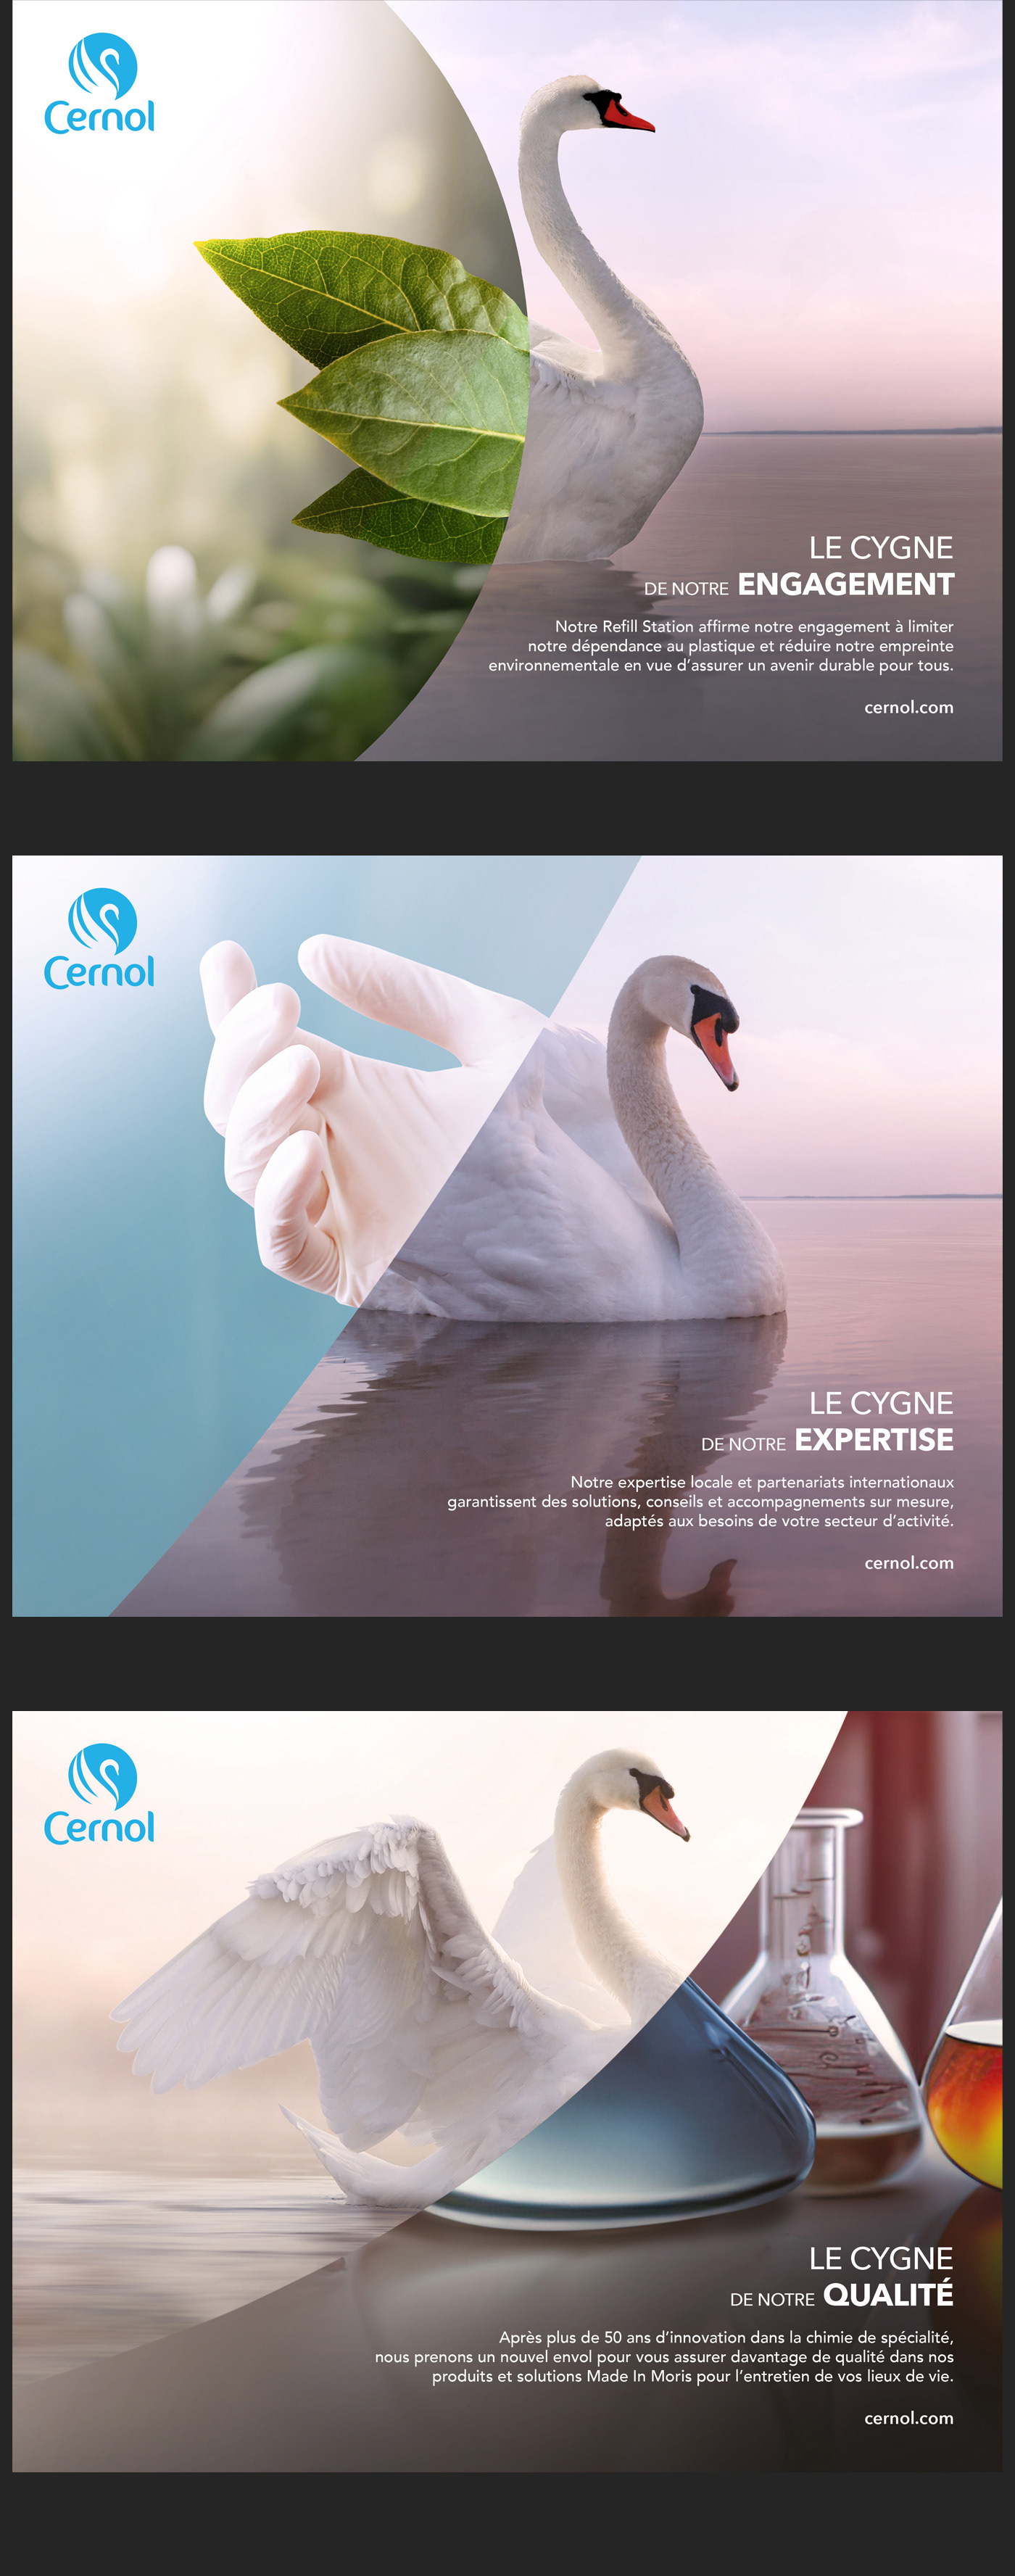 swan corporate advertising rebranding campaign Advertising  conceptual award winning corporate idea inspiration